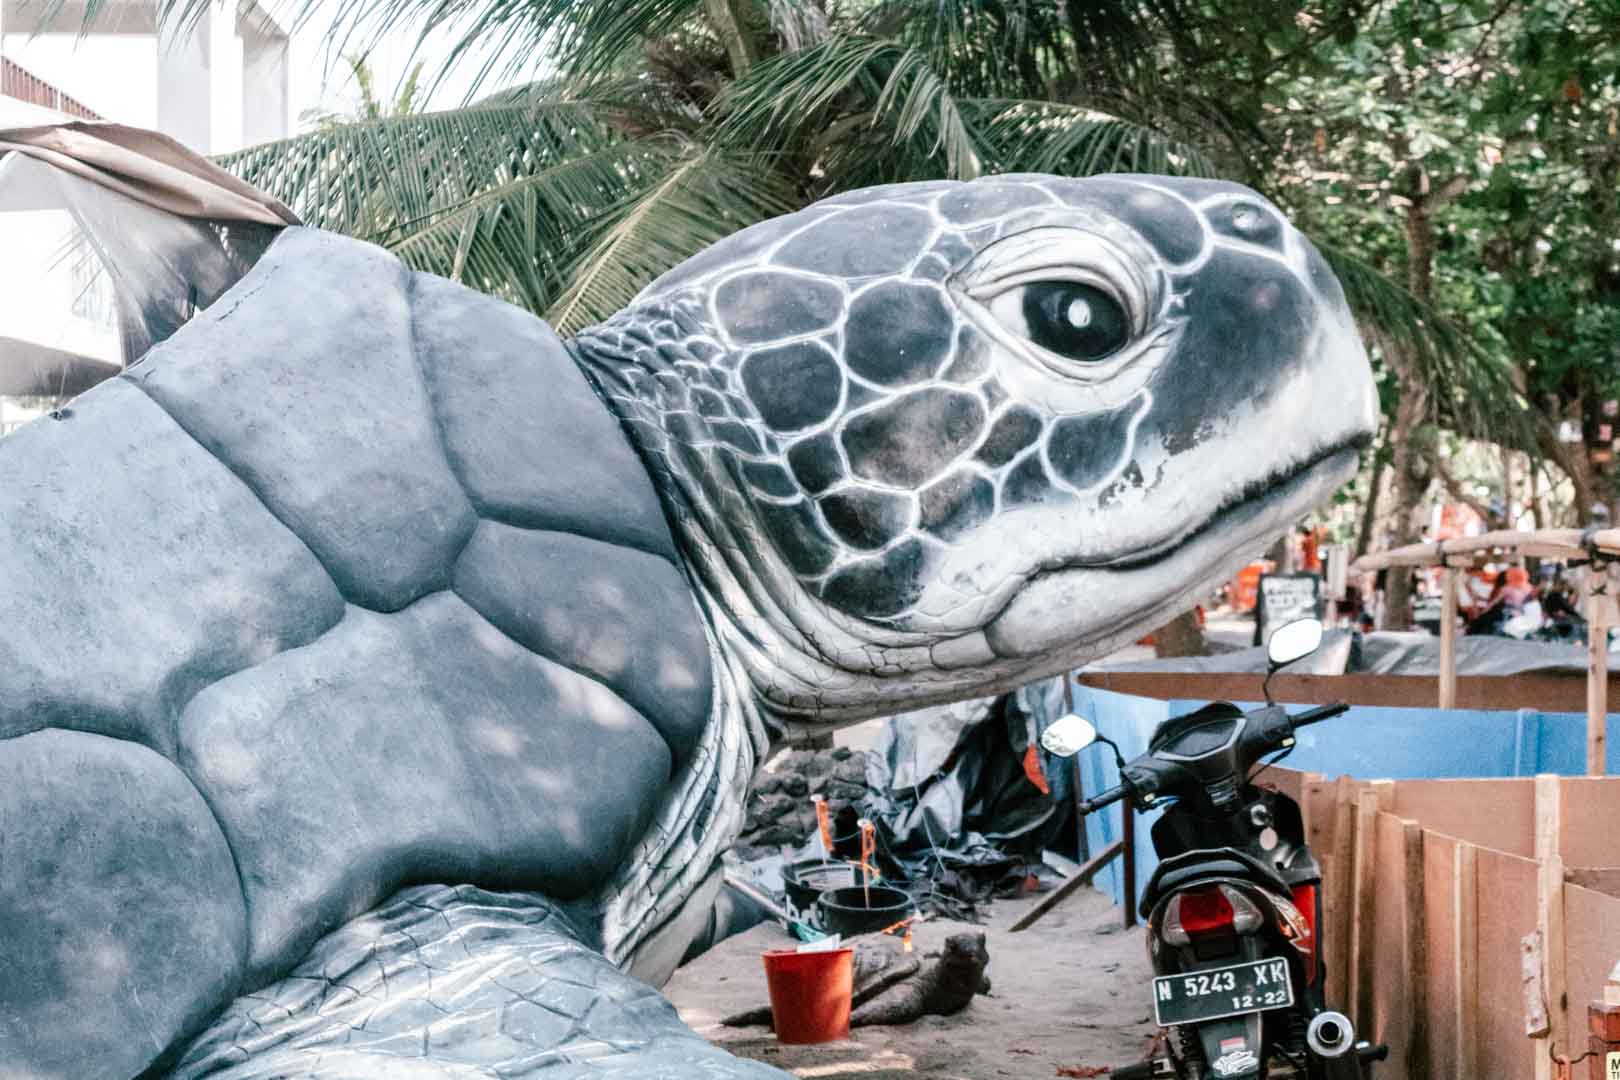 Releasing Turtles In Bali, Indonesia (The Bali Sea Turtle Society)